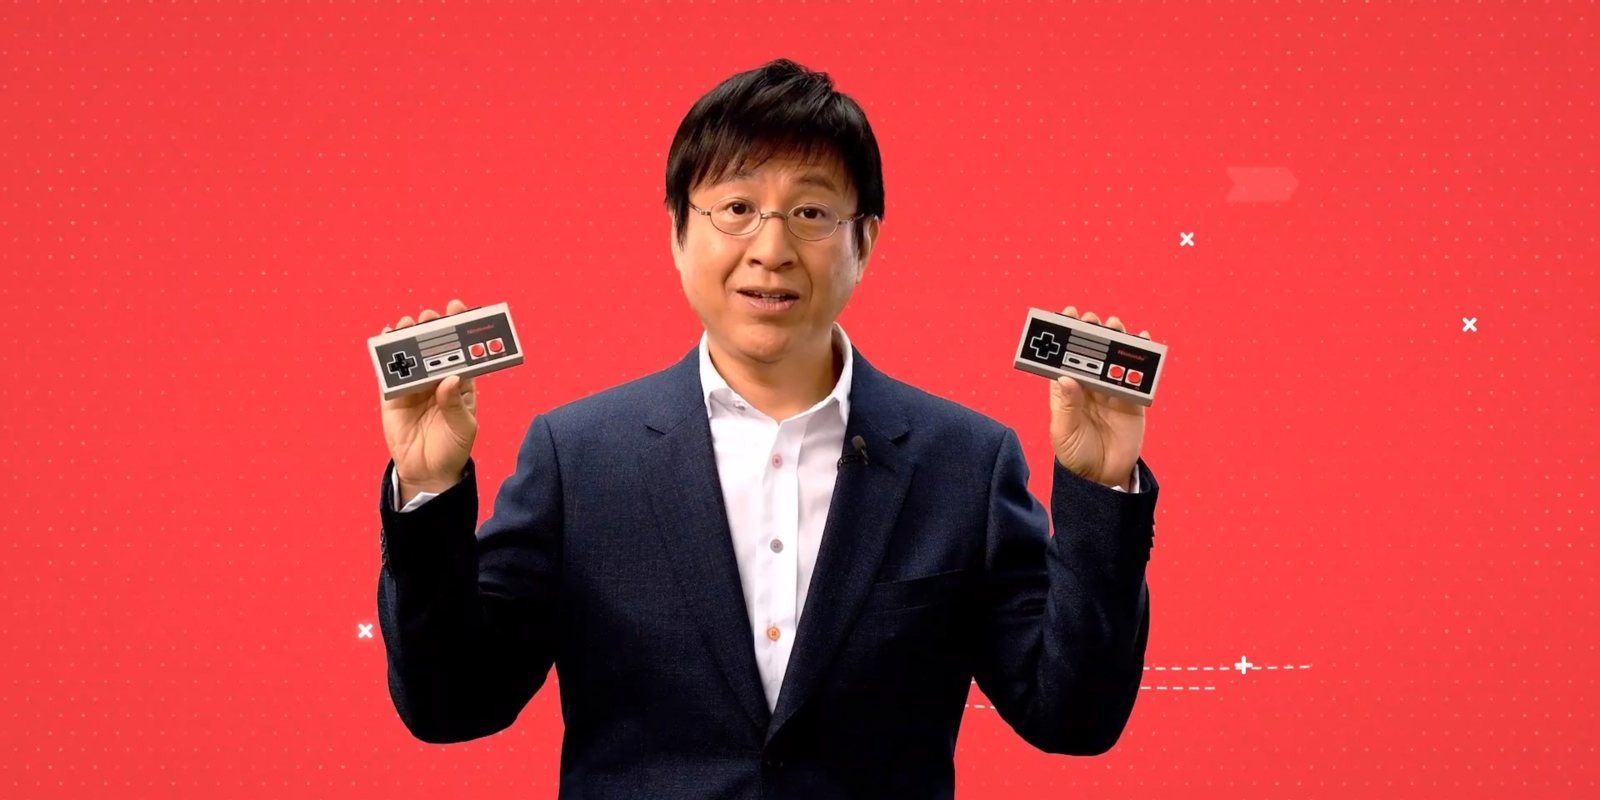 Anunciados mandos oficiales de NES y Famicom para Nintendo Switch